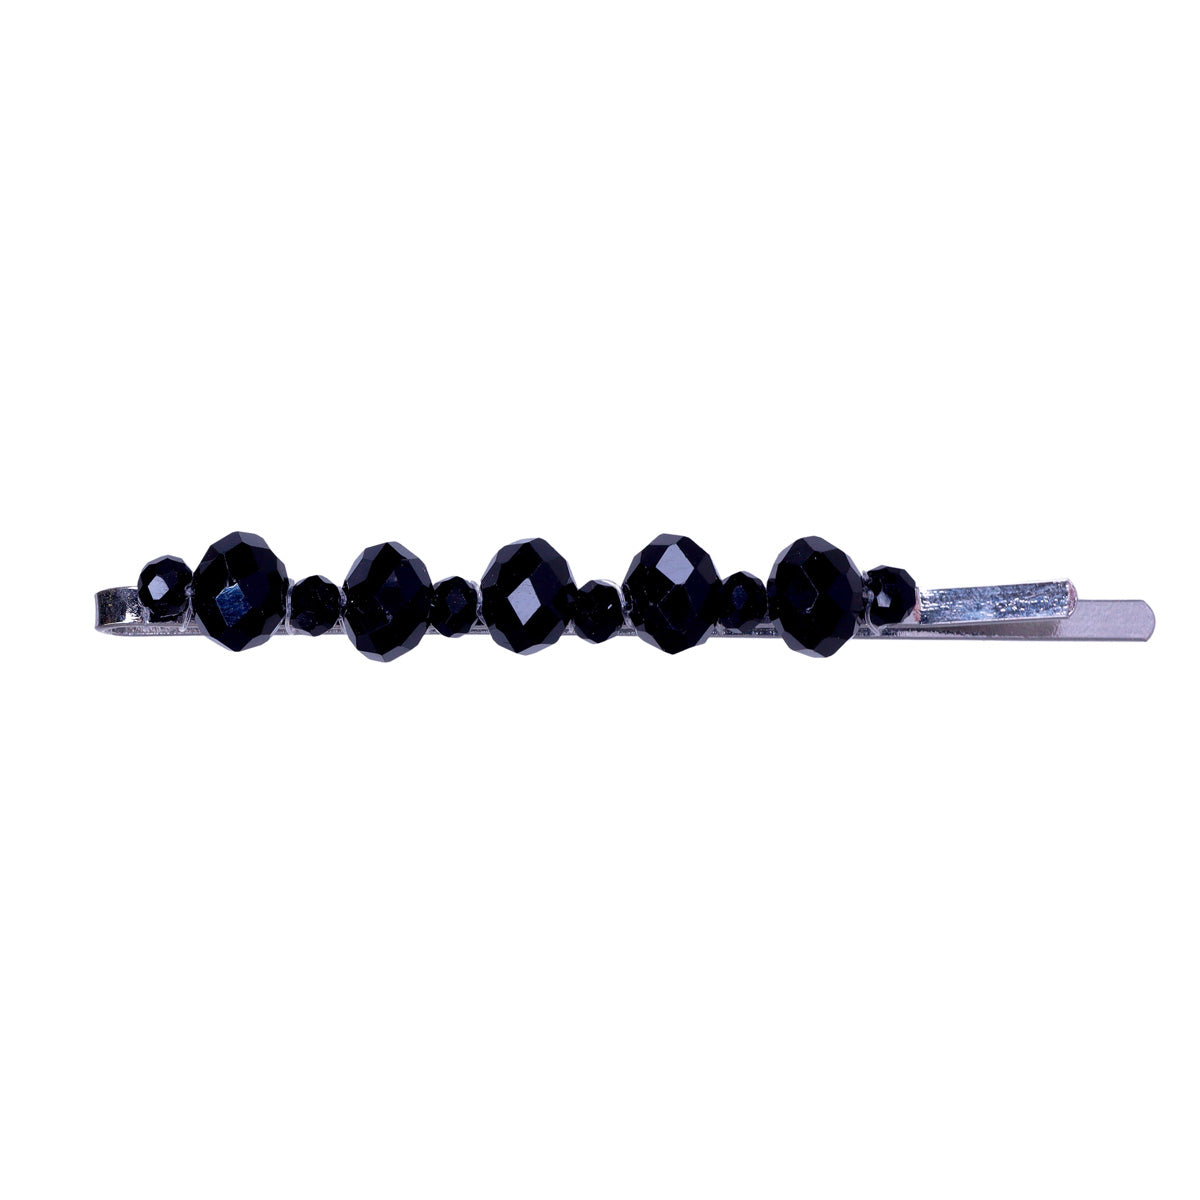 Glass bead decorative hair pins 1pcs